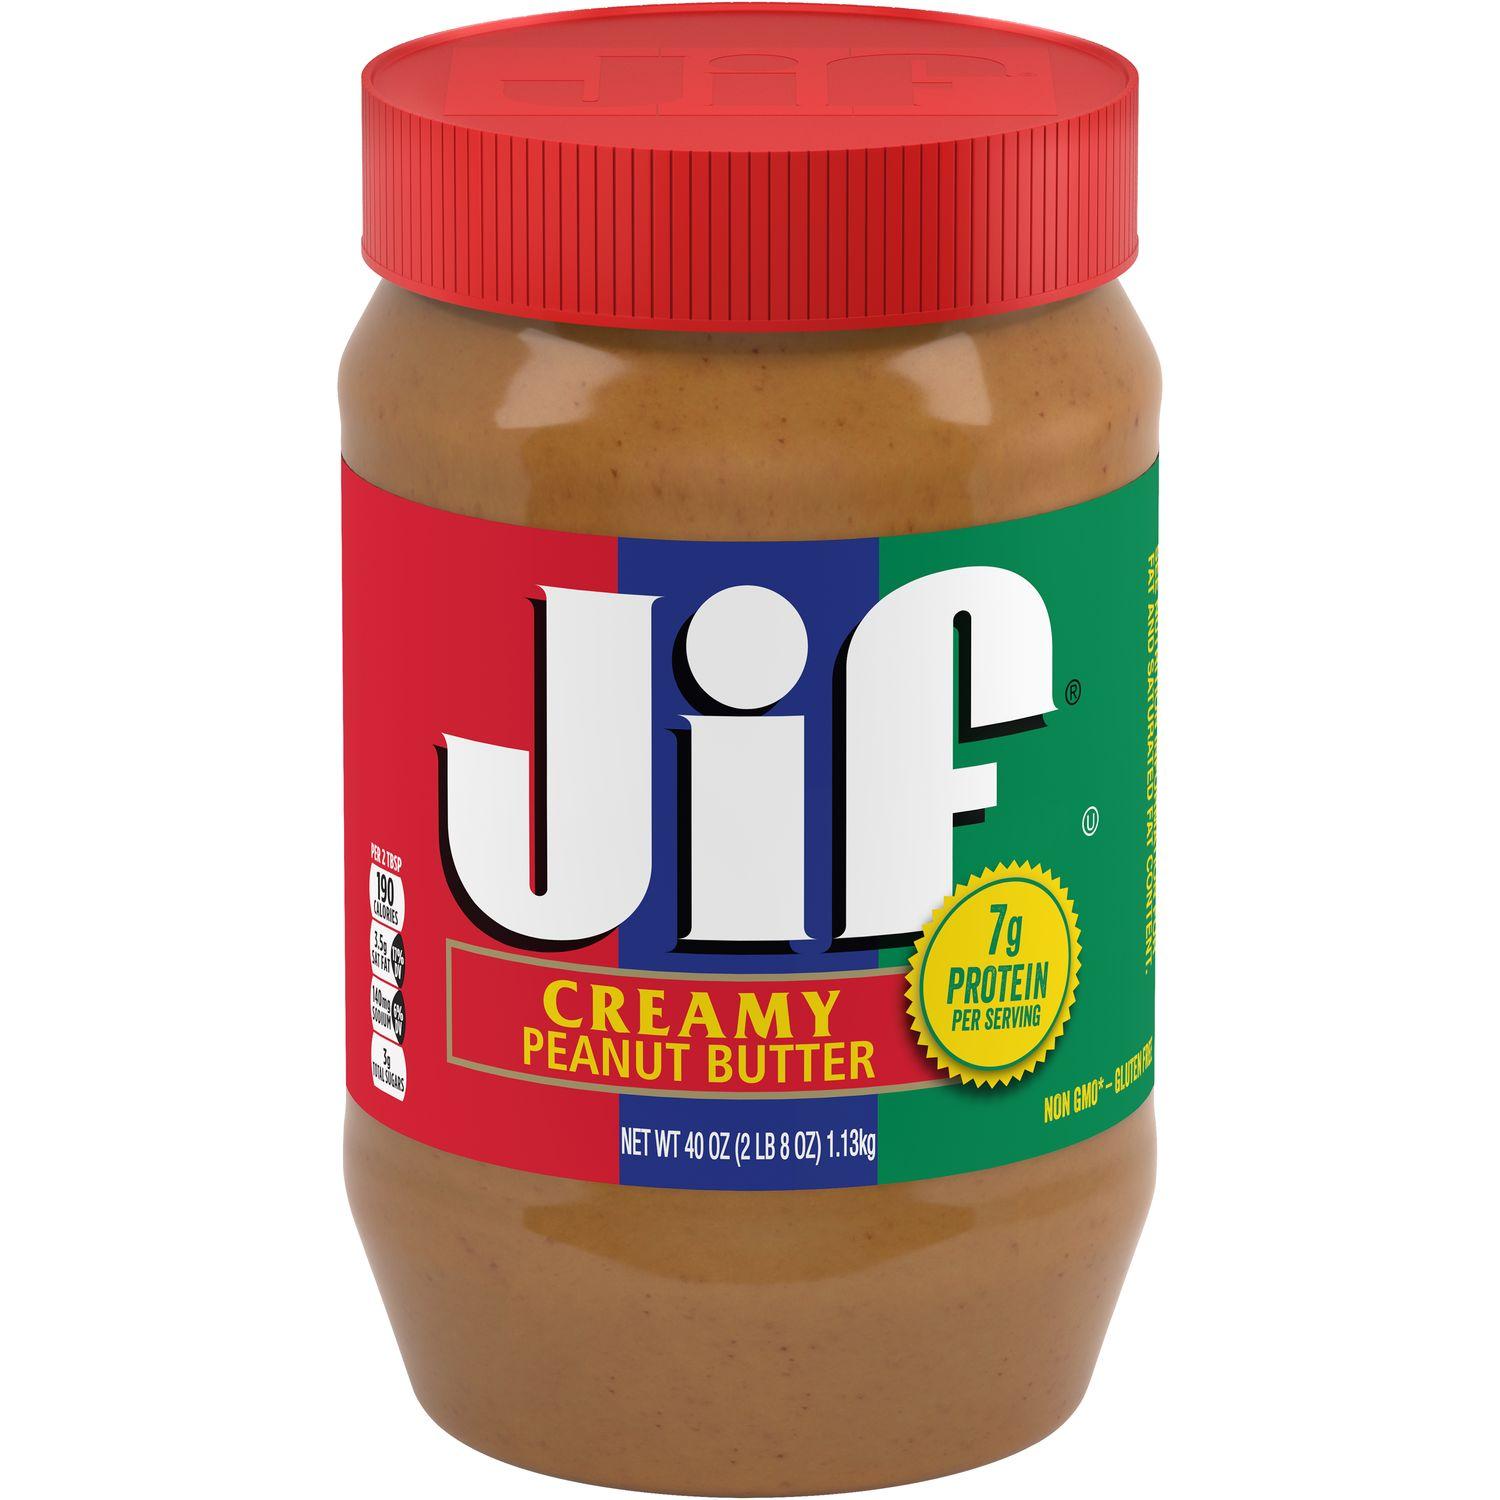 2 Jif Peanut Butter Spread for $3